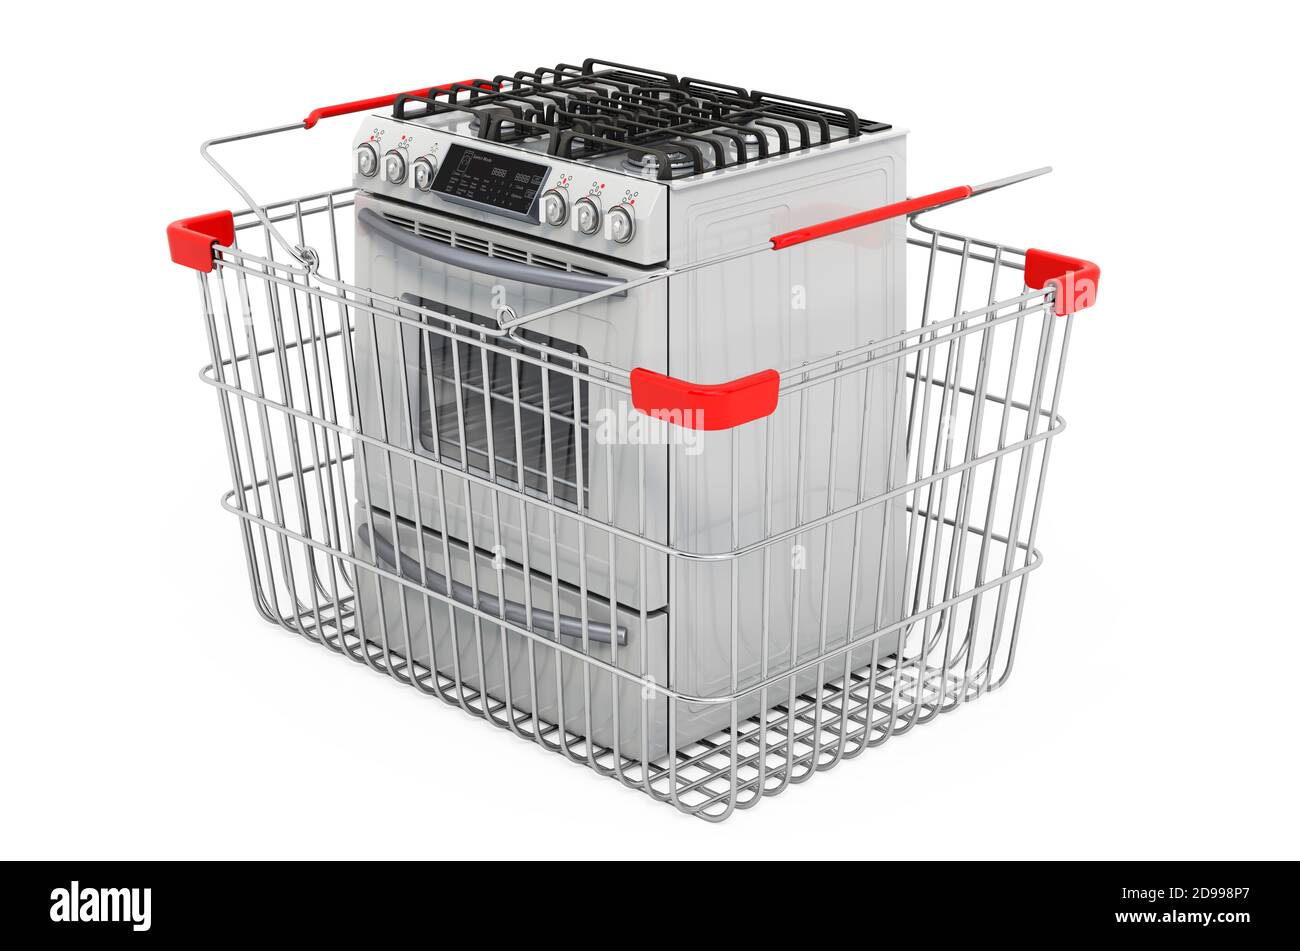 Gas range inside shopping basket, 3D rendering isolated on white background Stock Photo